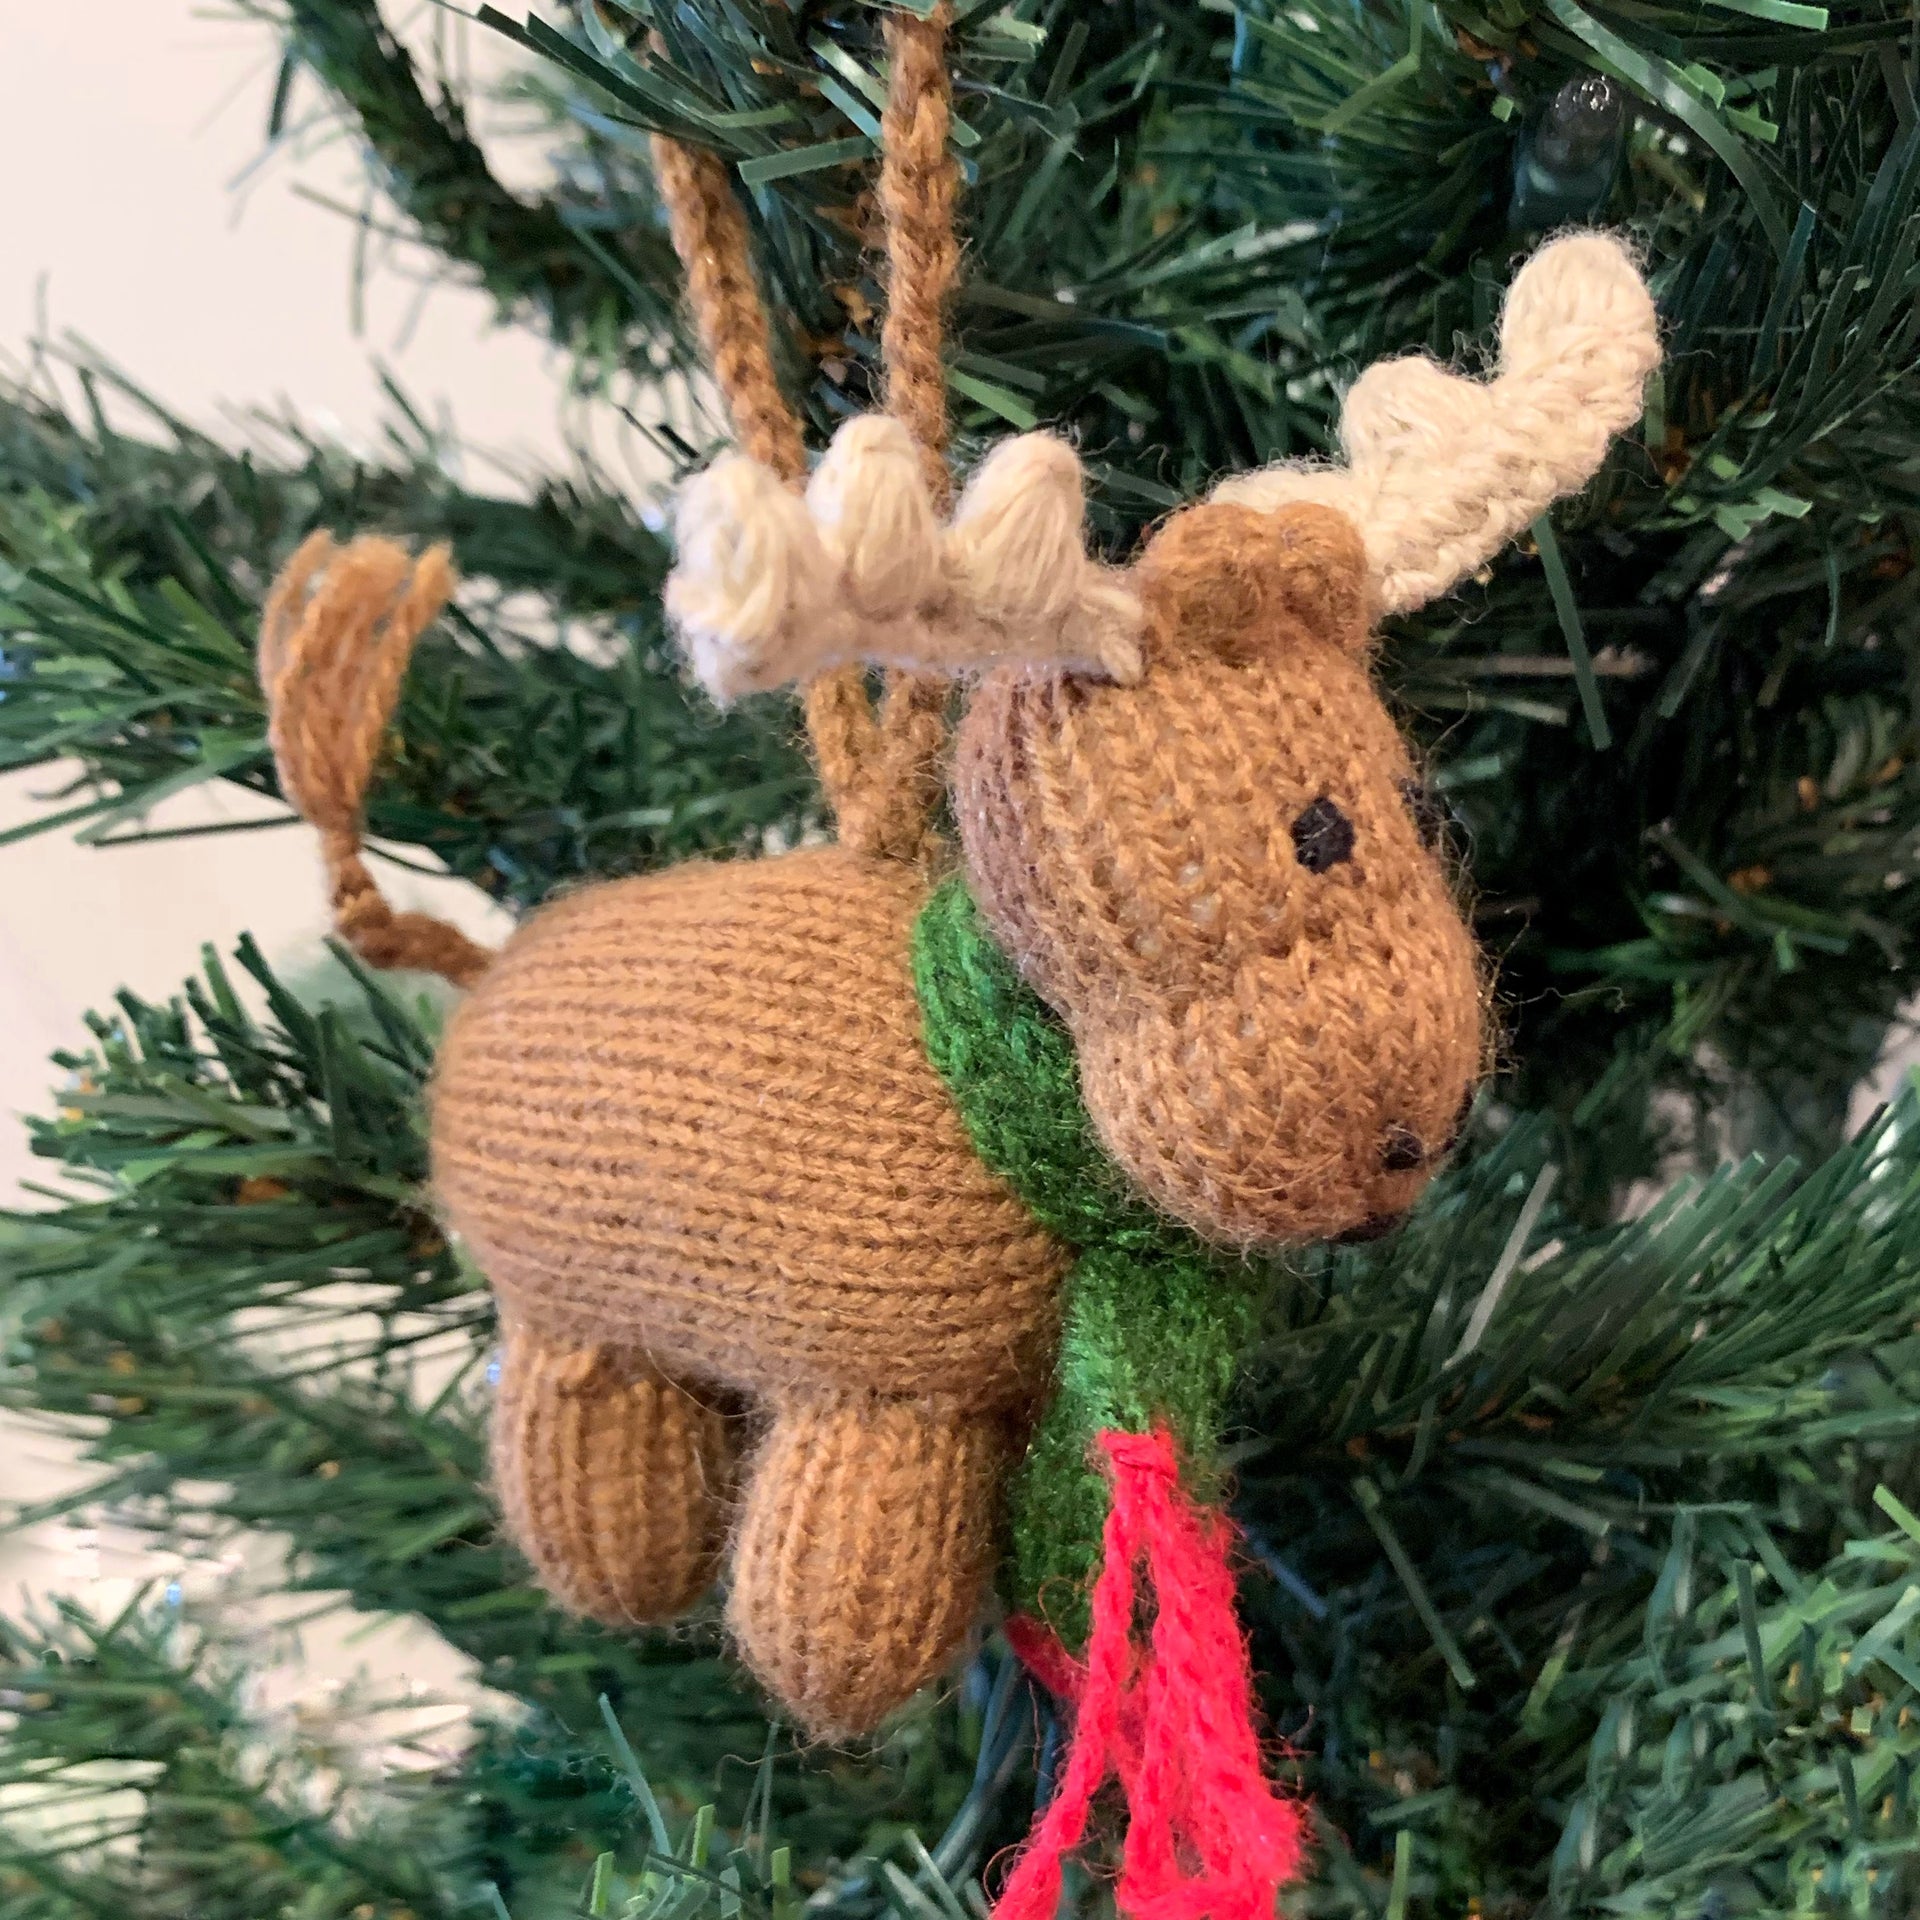 Moose Ornament, Knit Wool